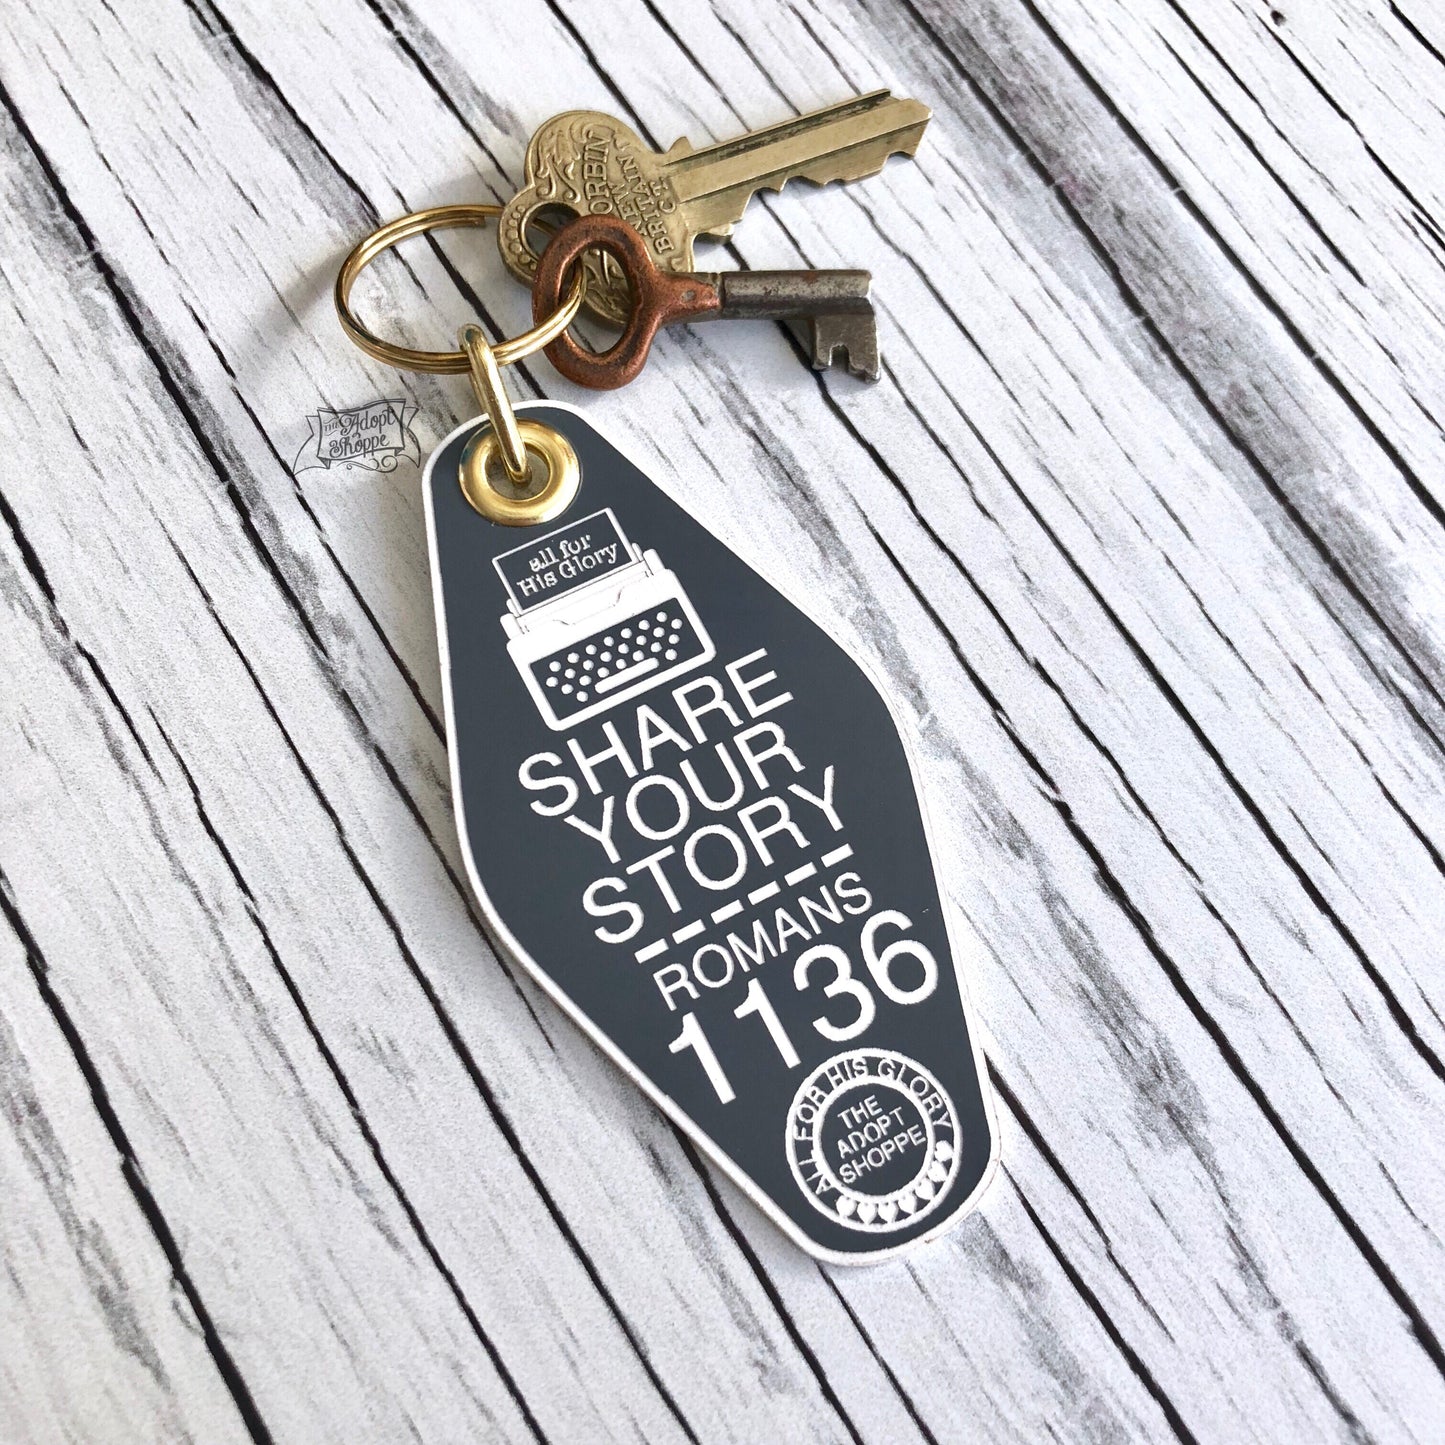 share your story typewriter grey retro motel key tag fob